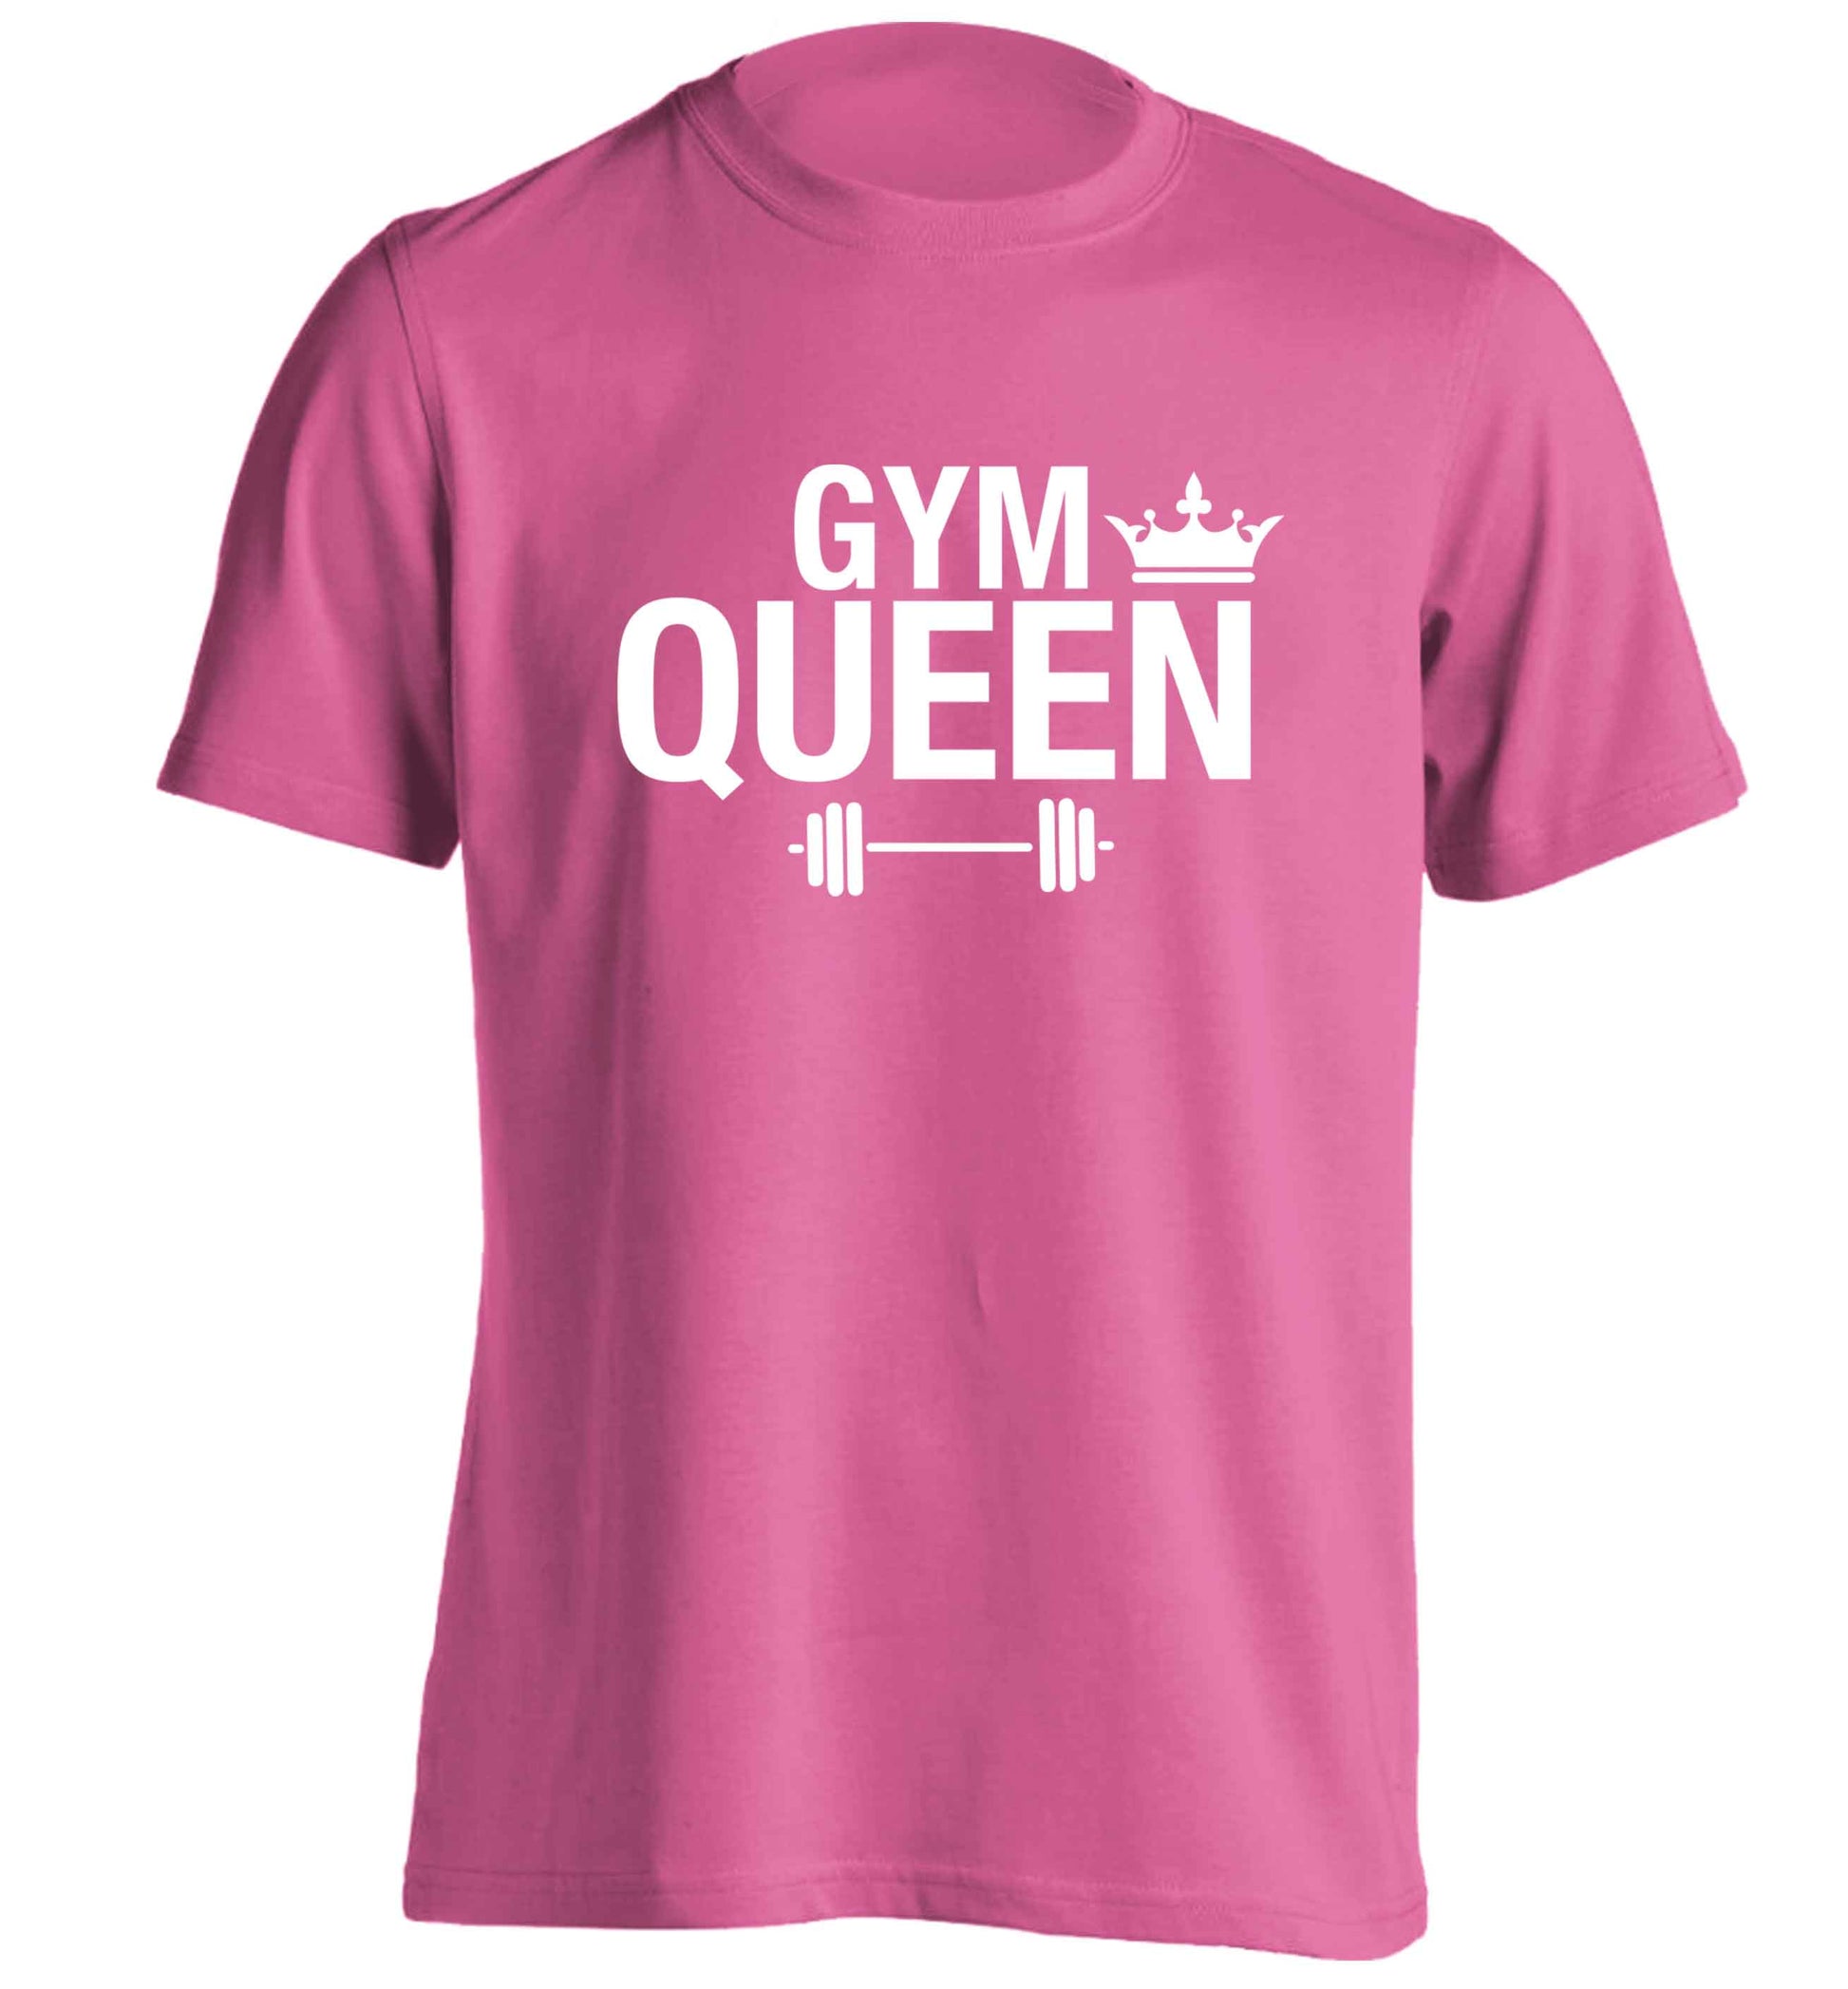 Gym queen adults unisex pink Tshirt 2XL